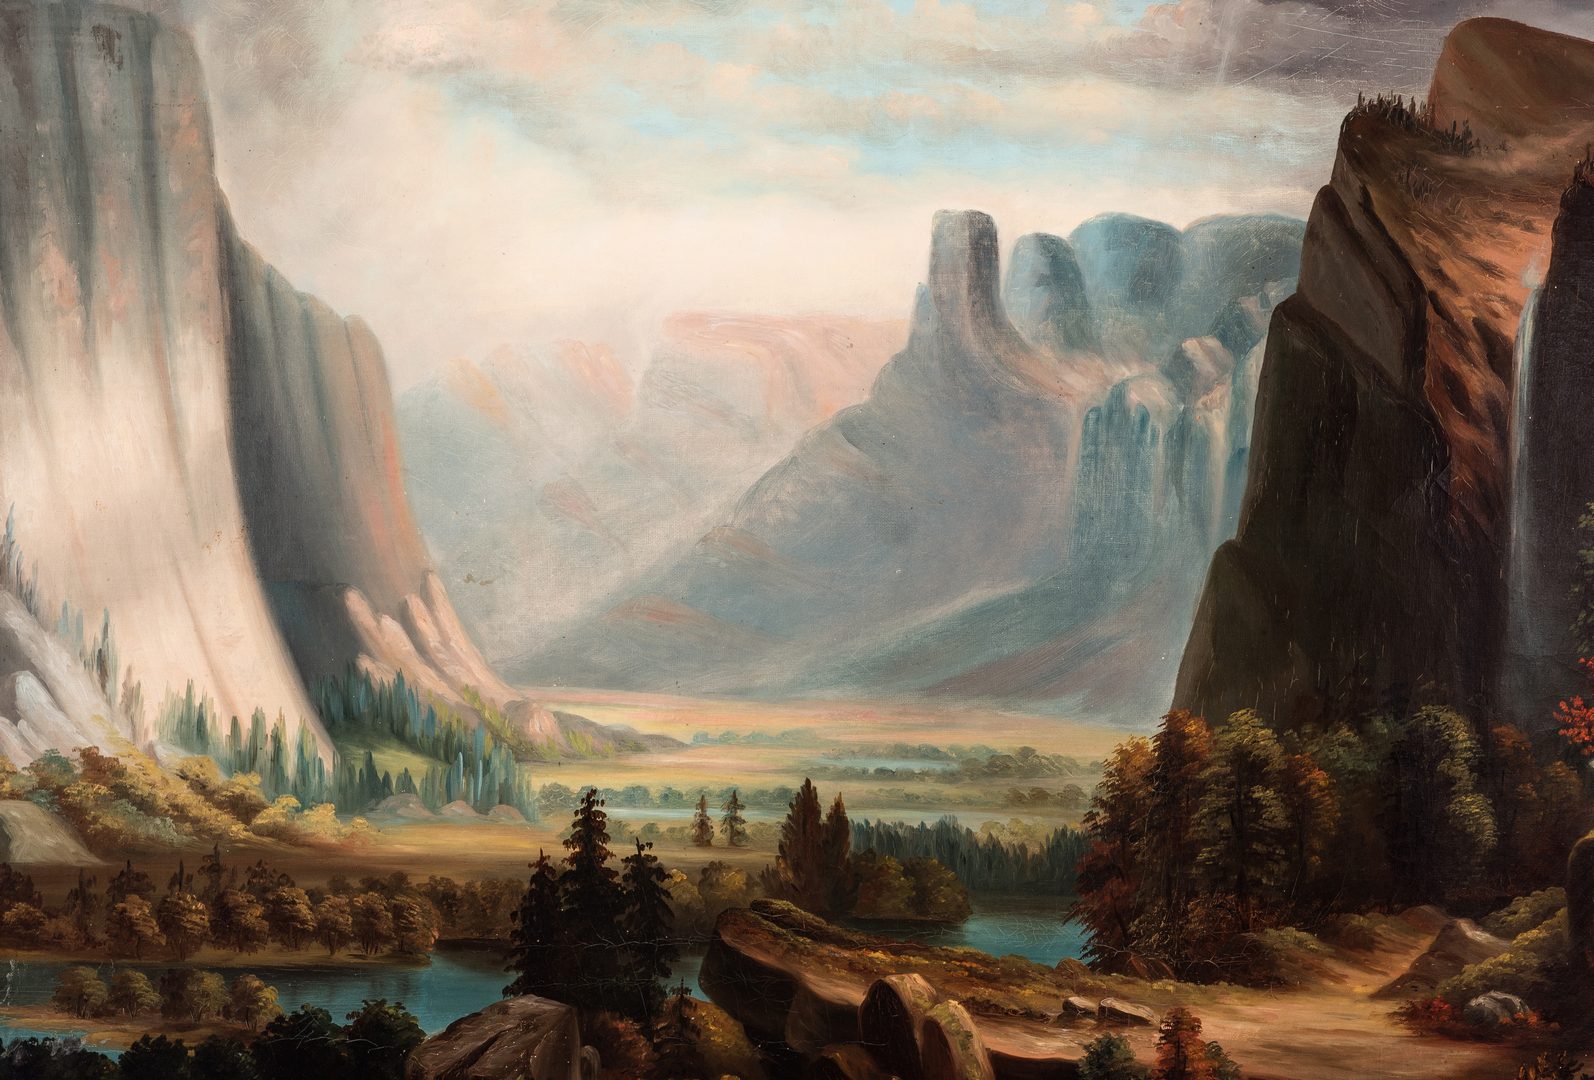 Lot 553: Attr. William Harring, O/C, Yosemite Valley